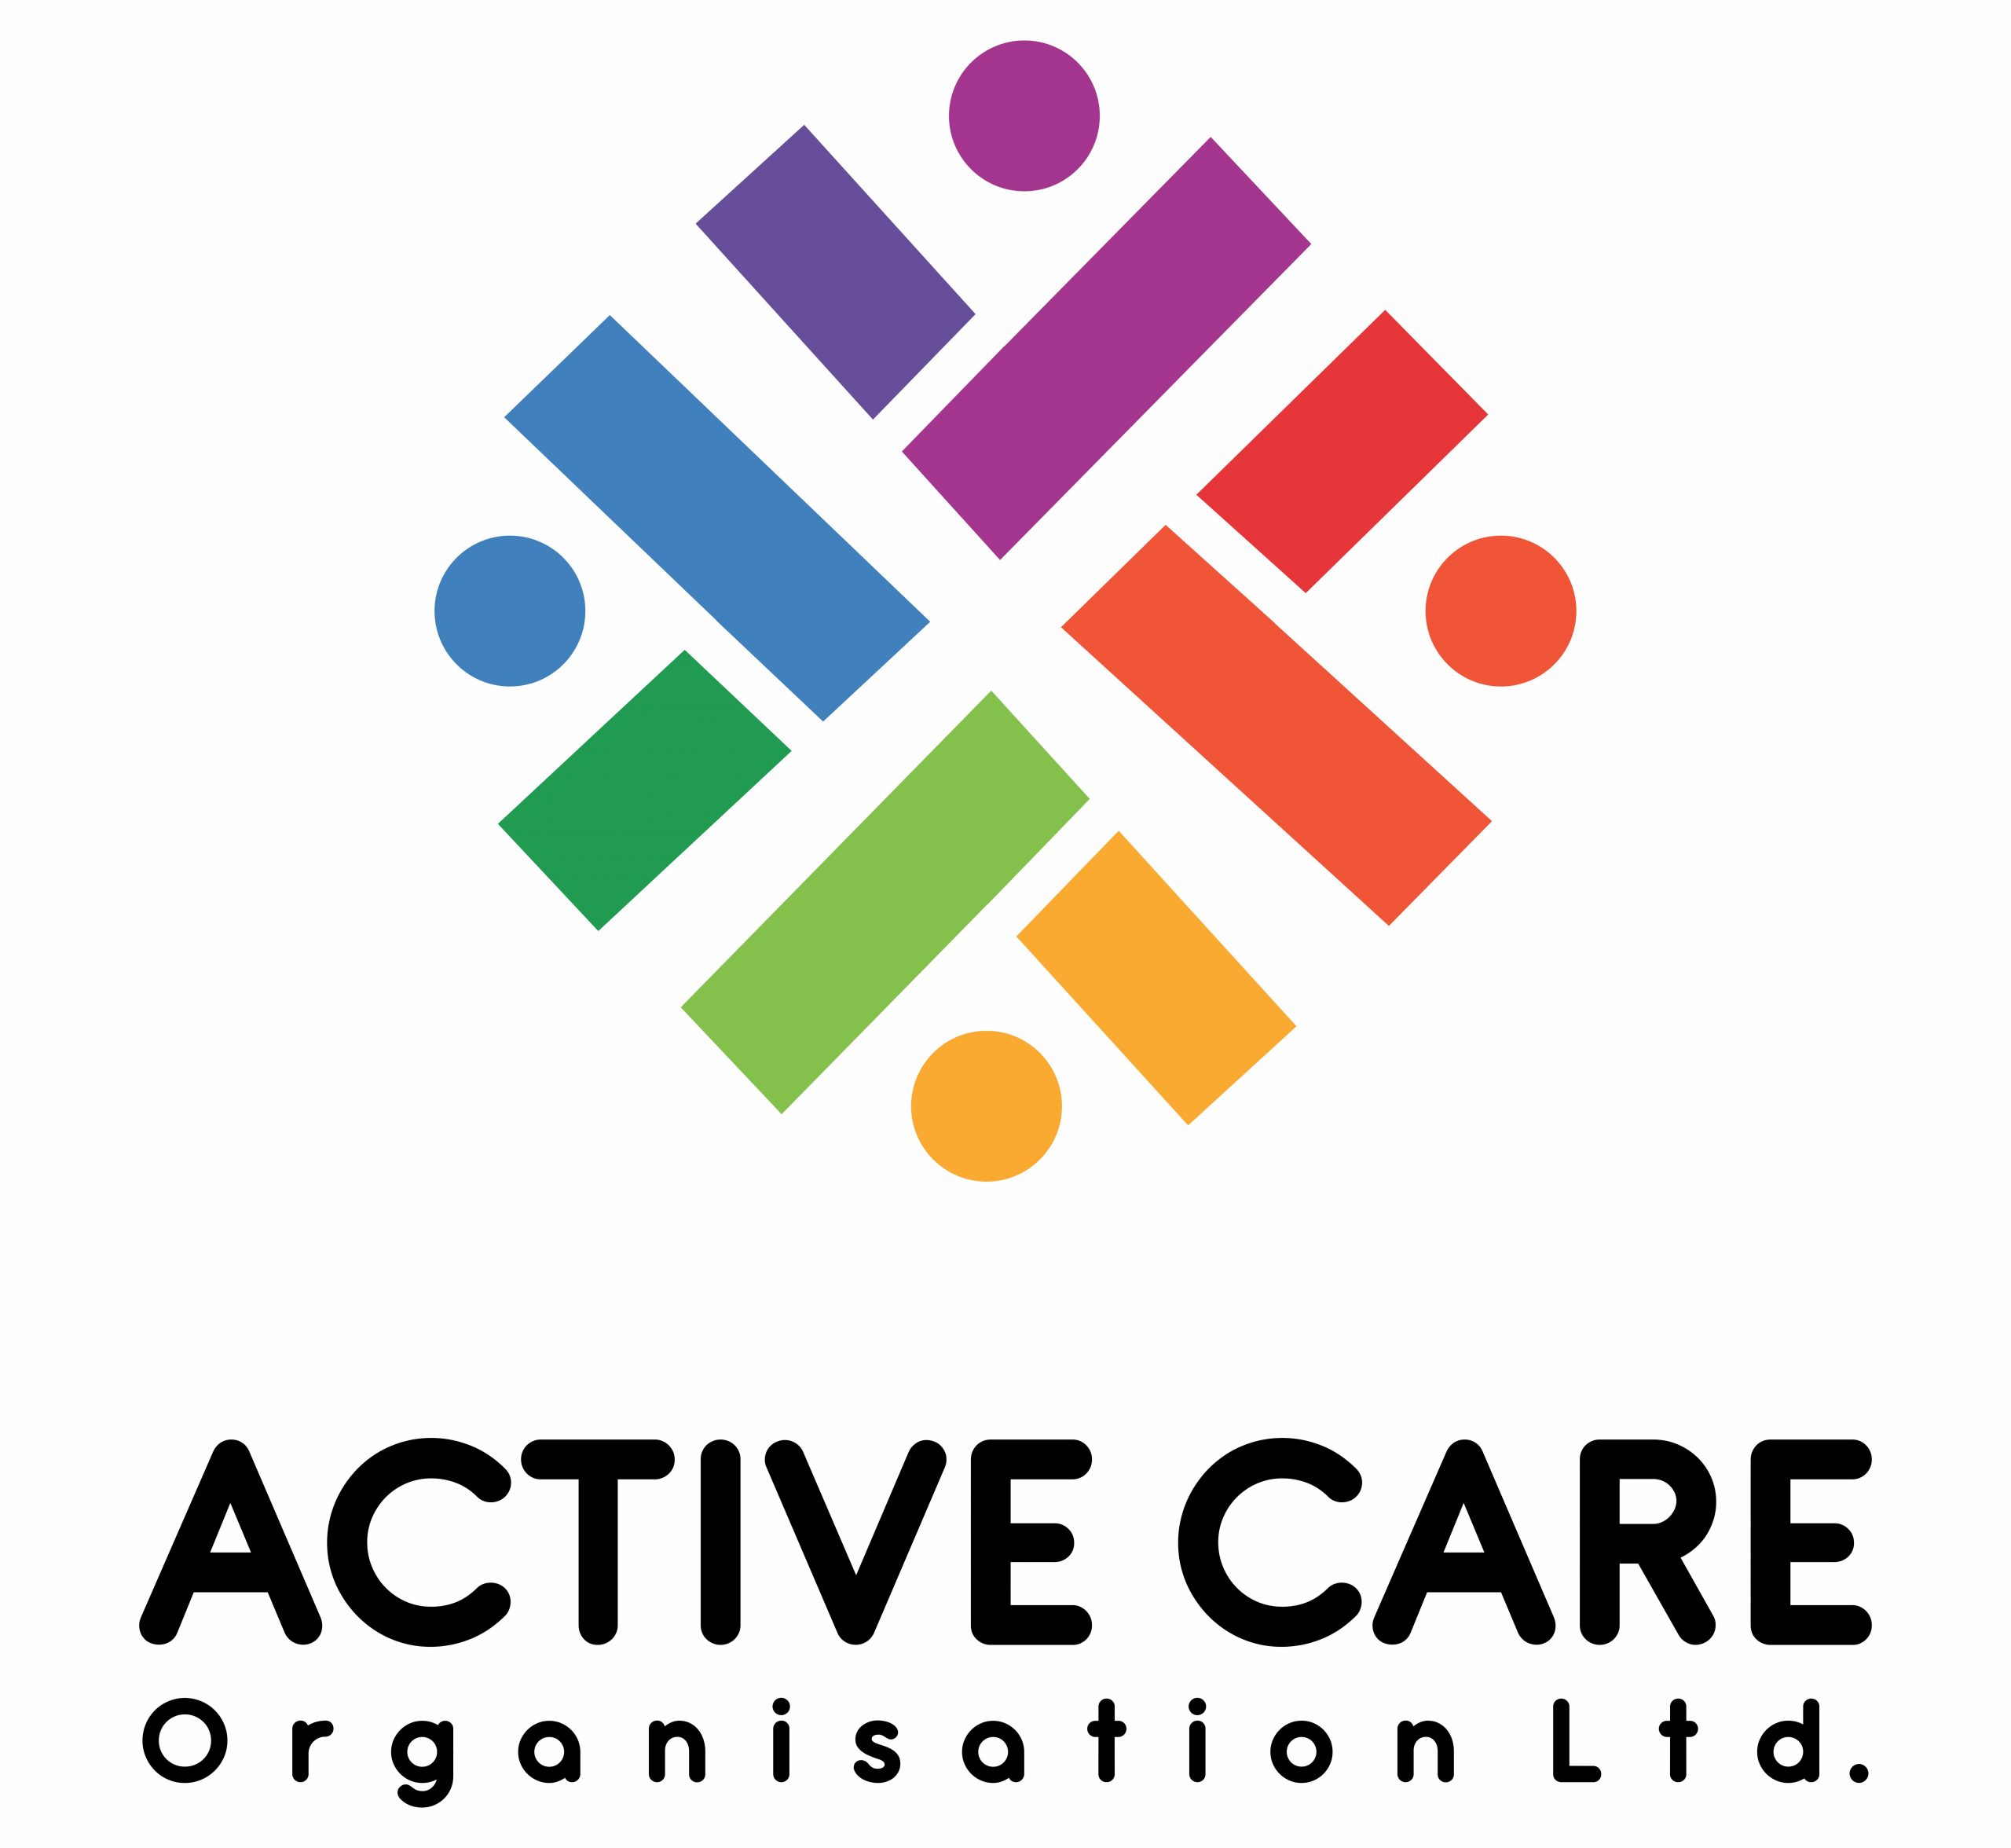 Active Care Organisation Ltd